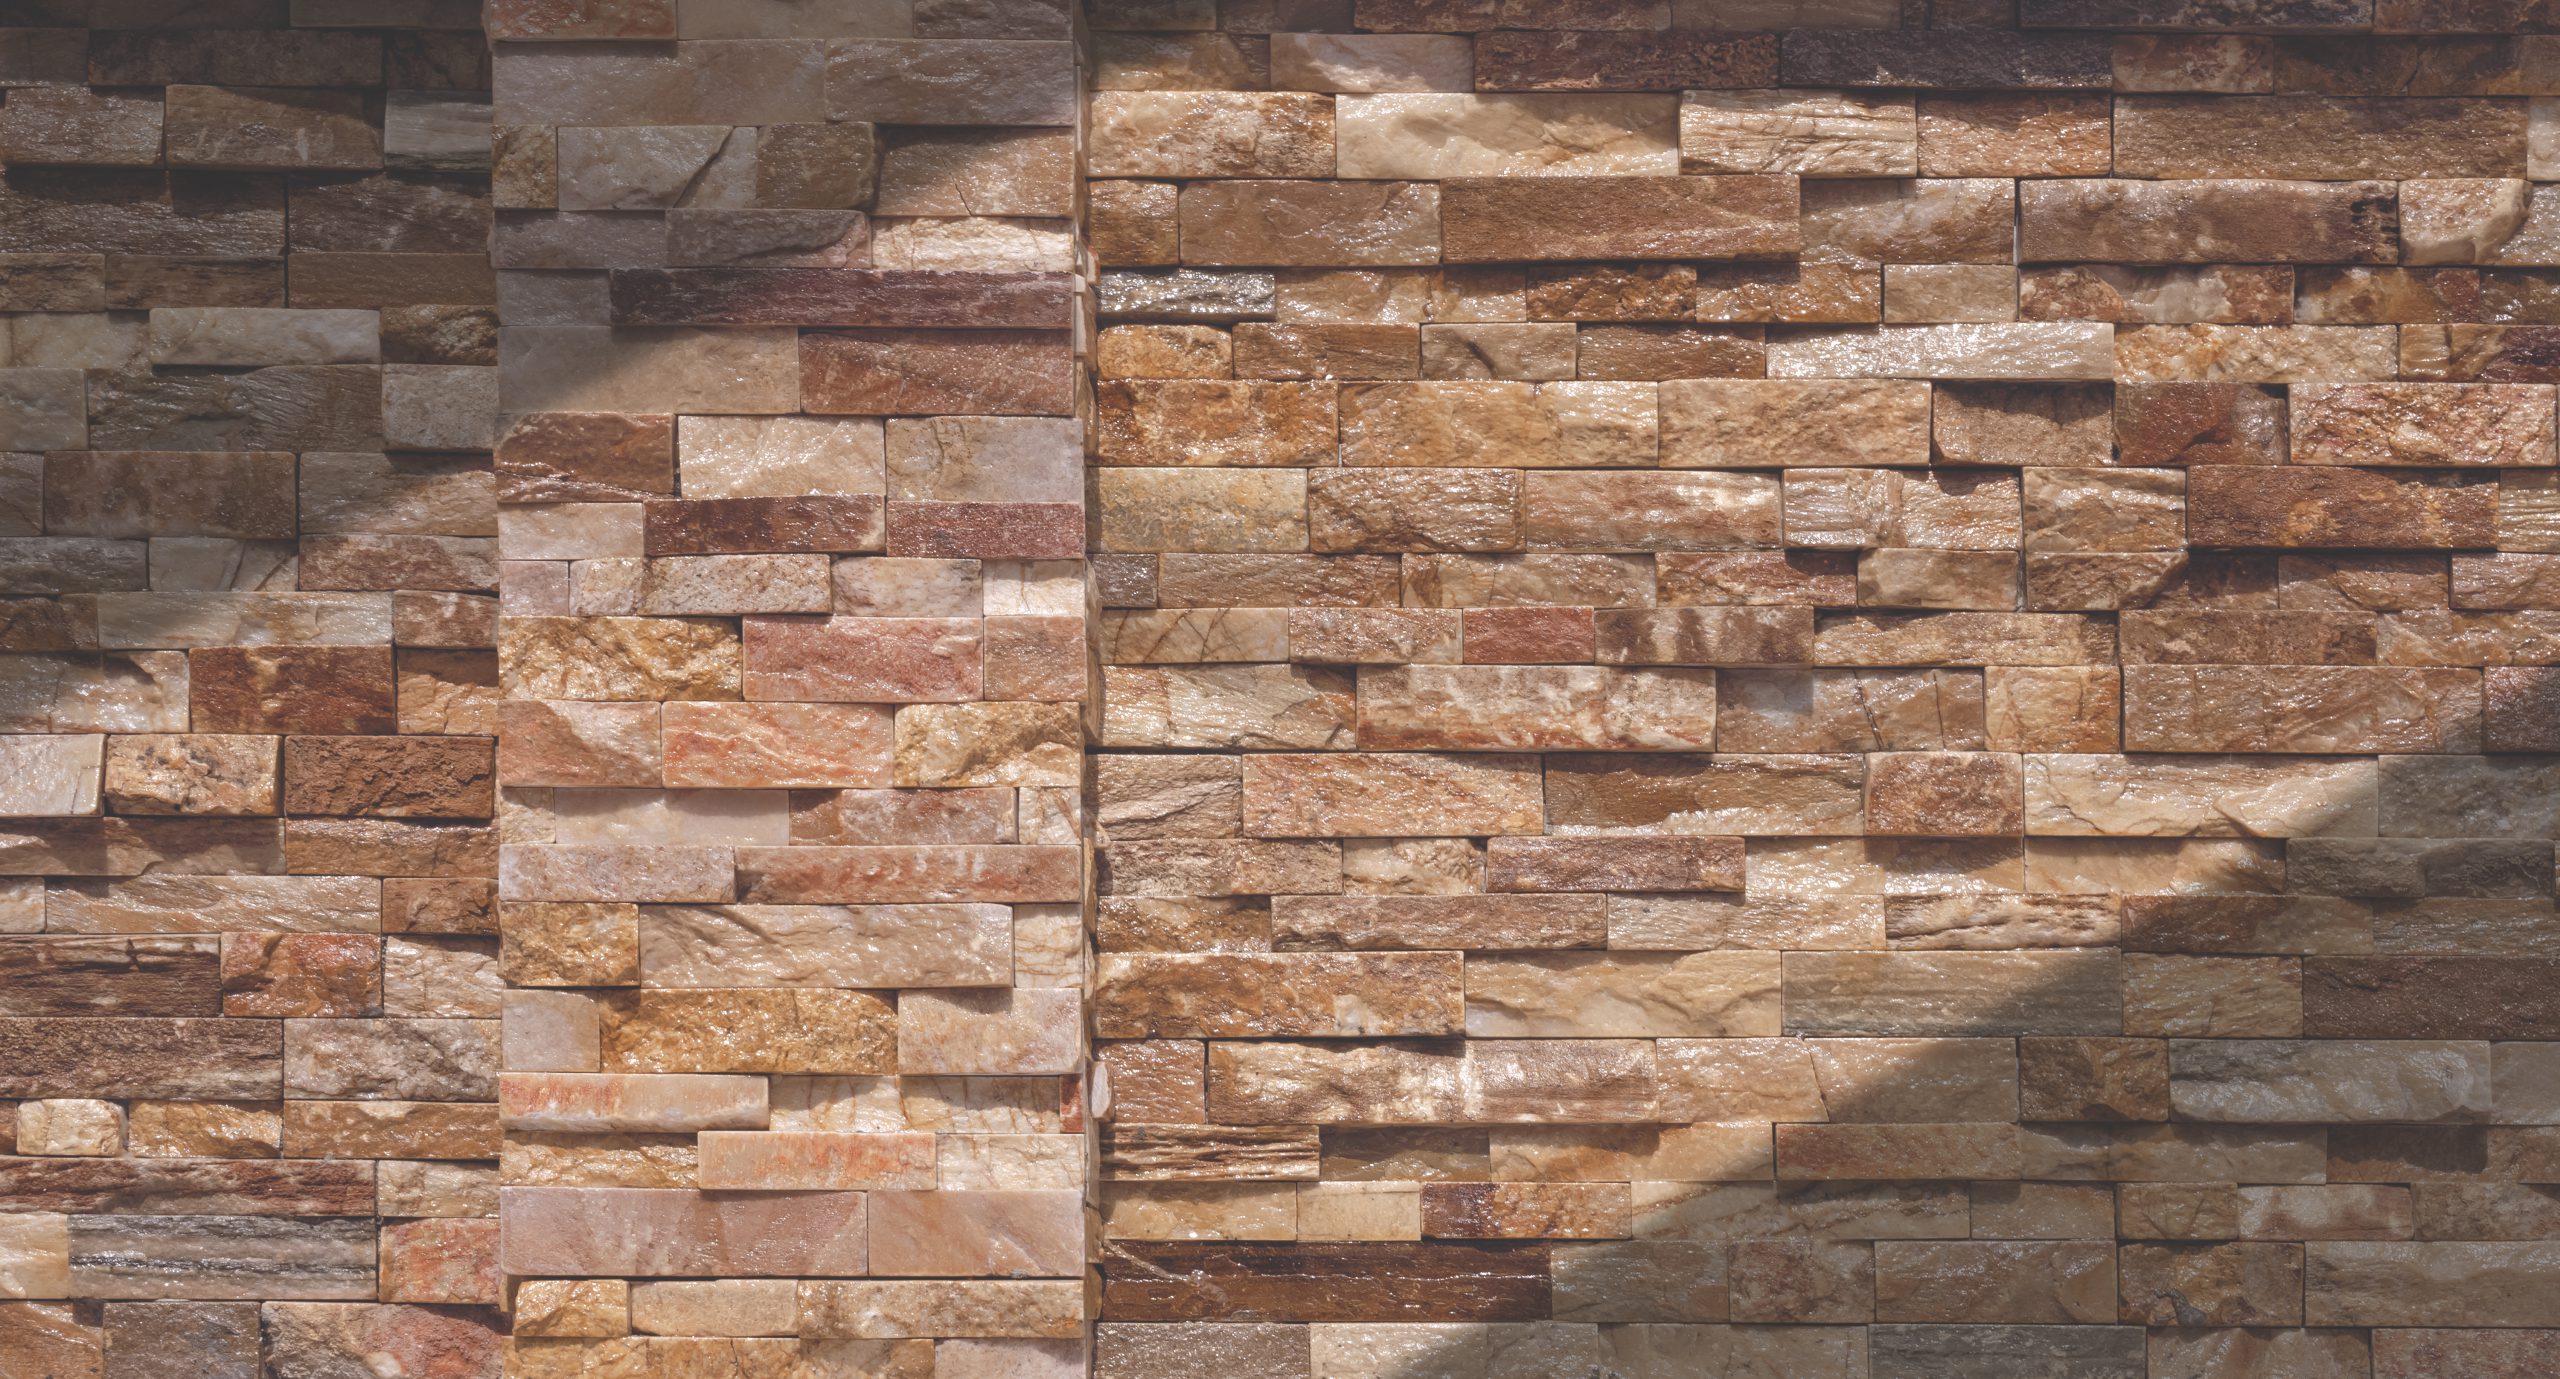 Background Of Brown And White Cladding Stone Brick 2023 03 13 18 46 41 Utc